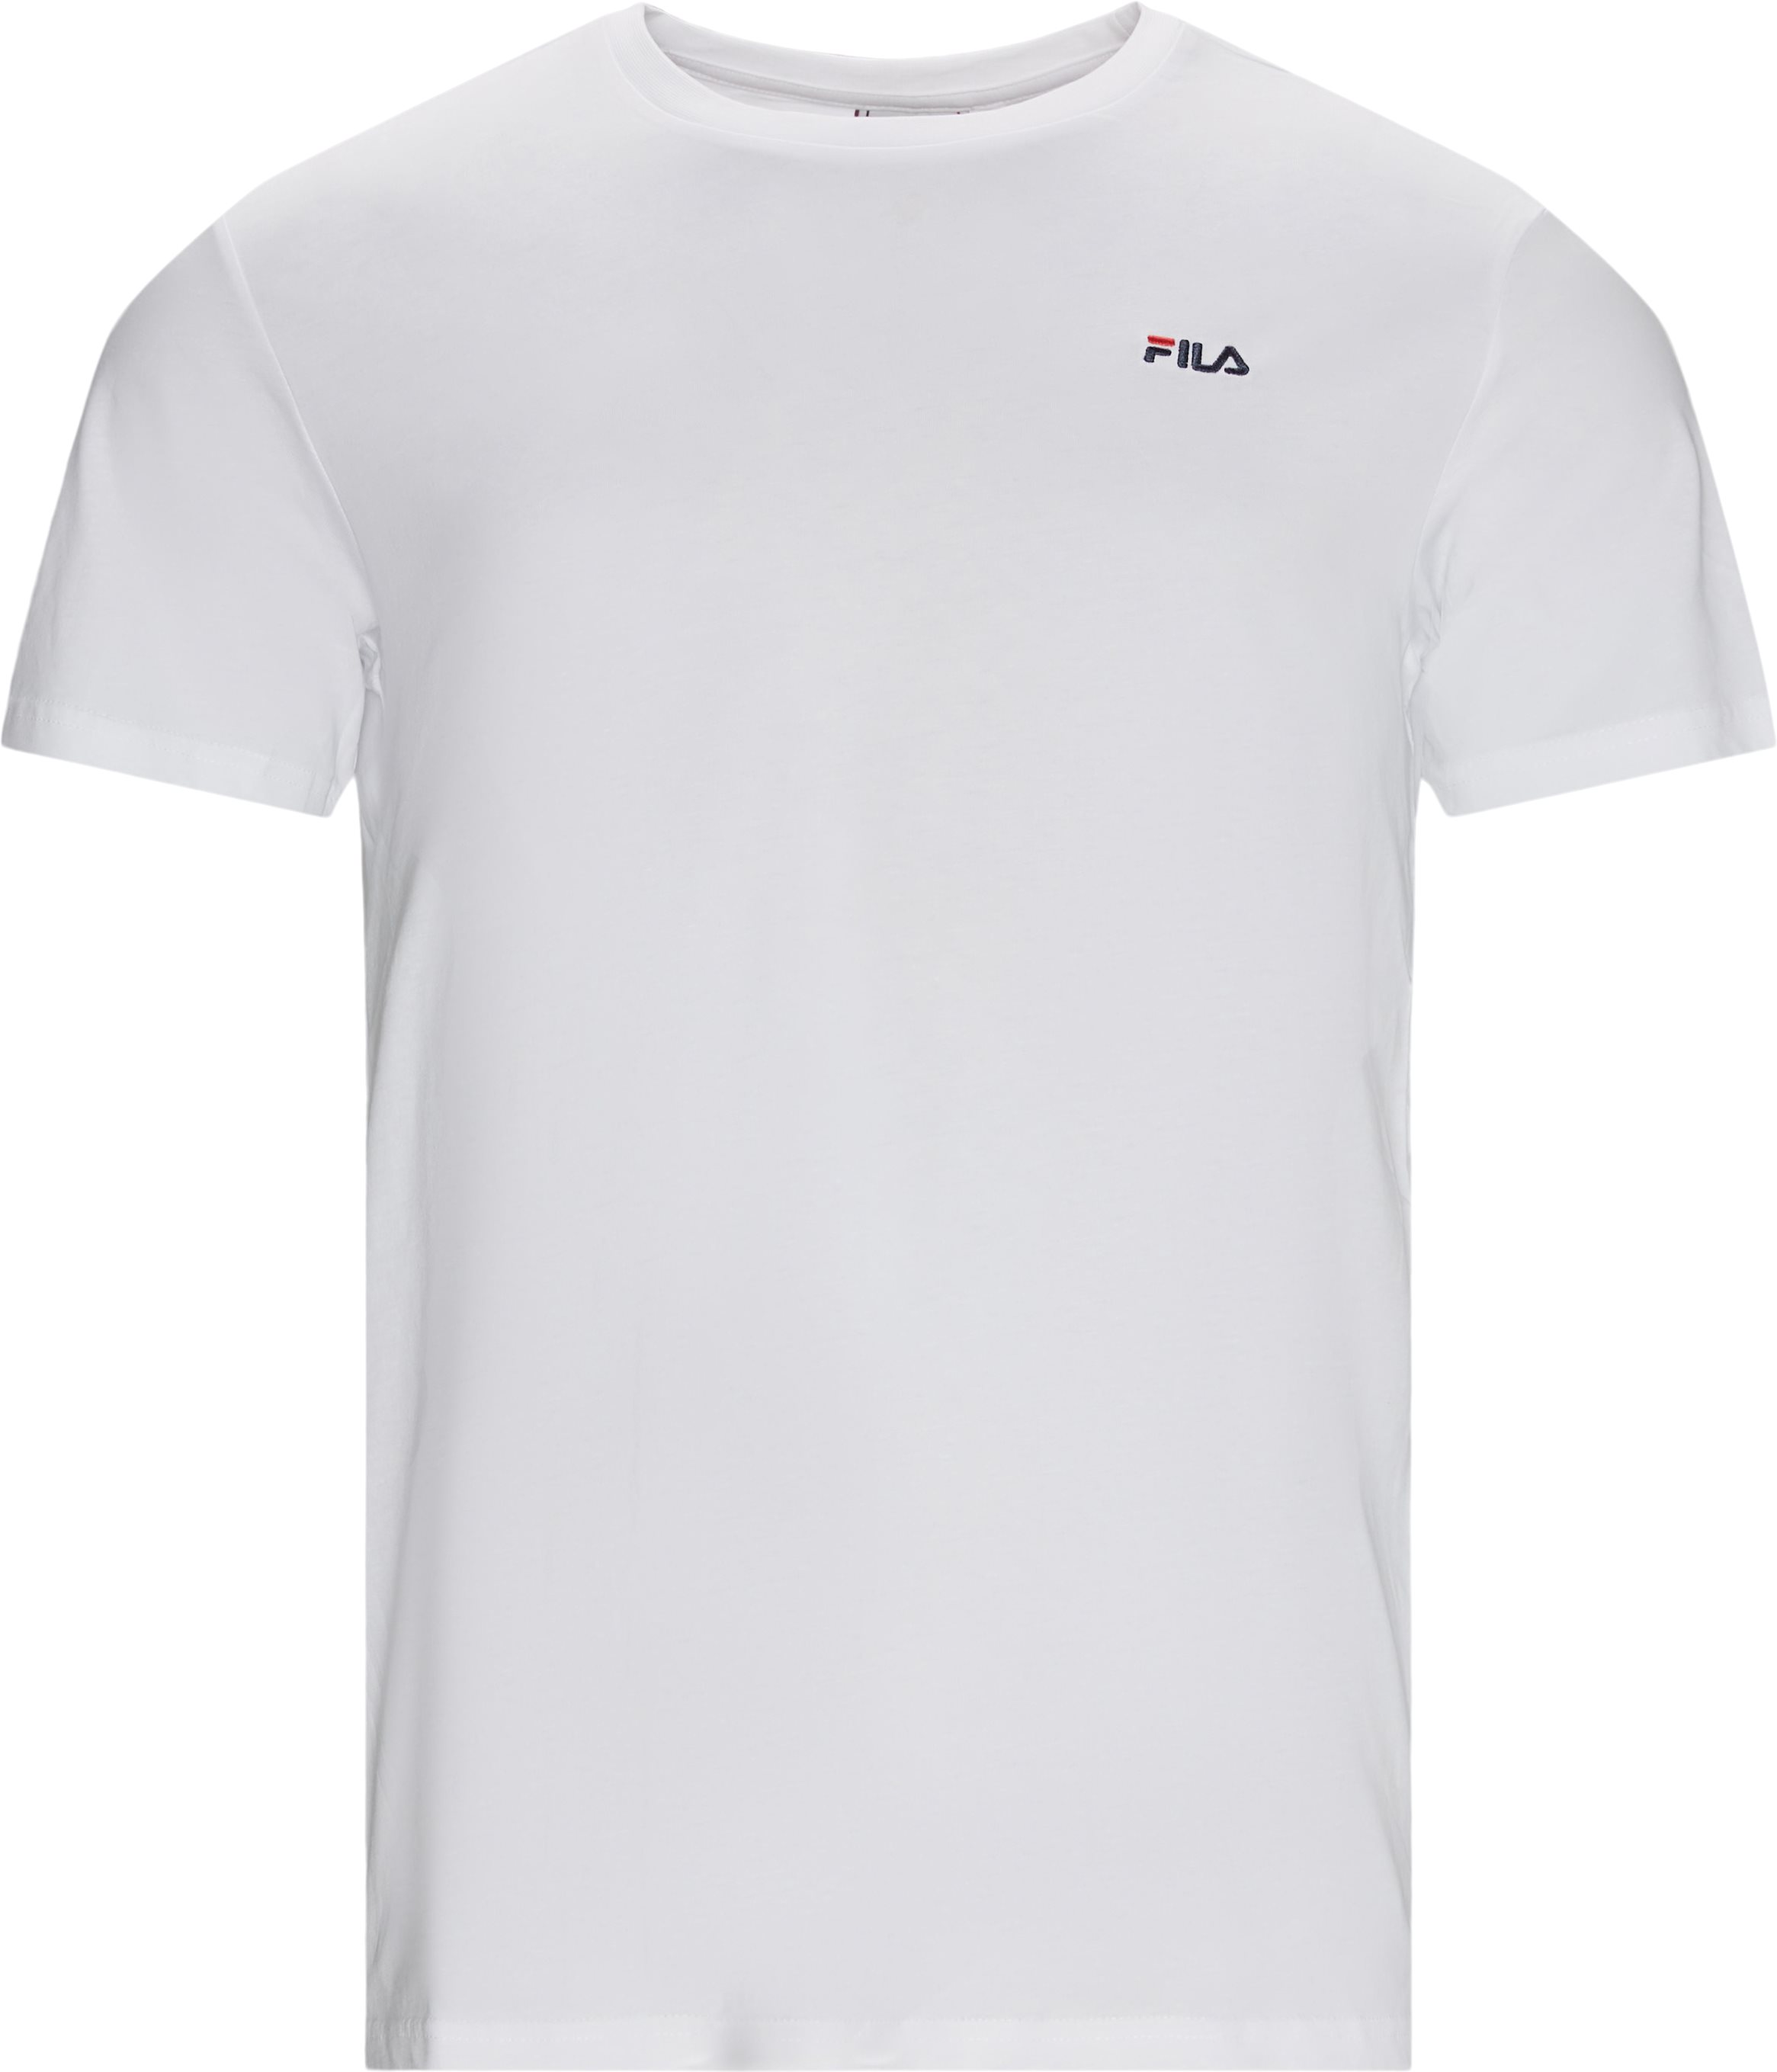 Edgar Tee - T-shirts - Regular fit - Vit